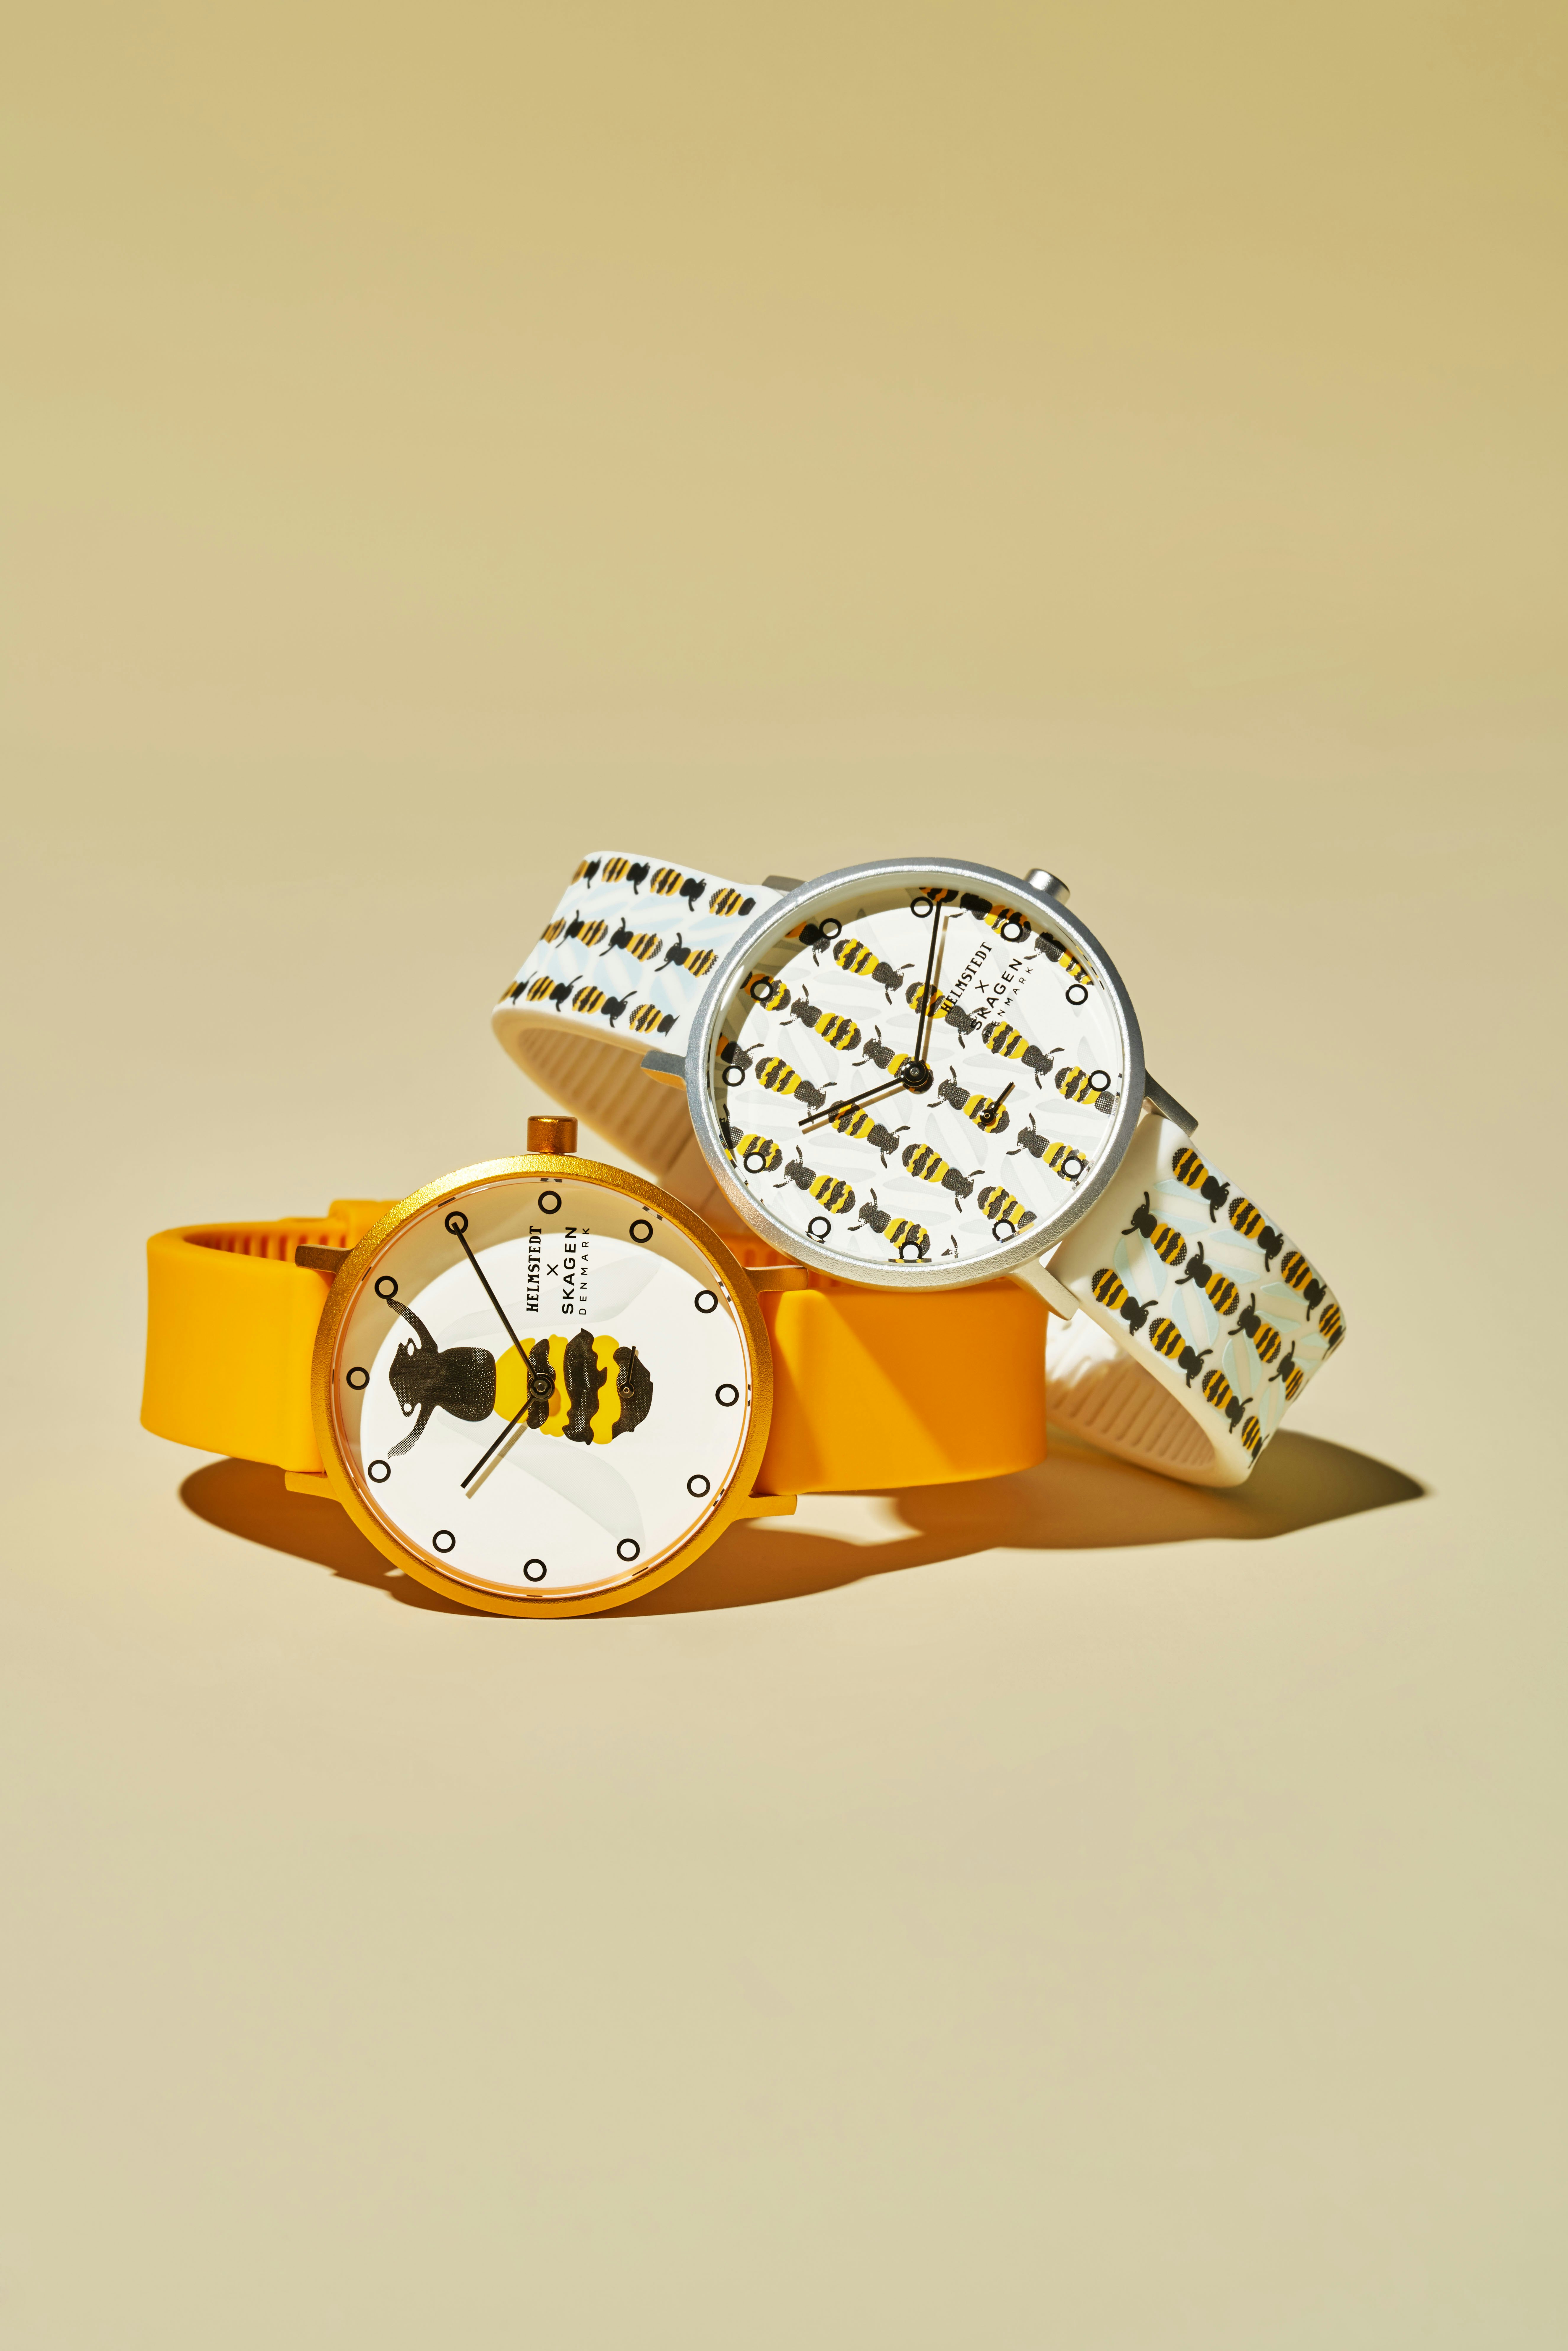 Danish Fashion Brand Helmstedt & Skagen's Colorful Watches Make It 